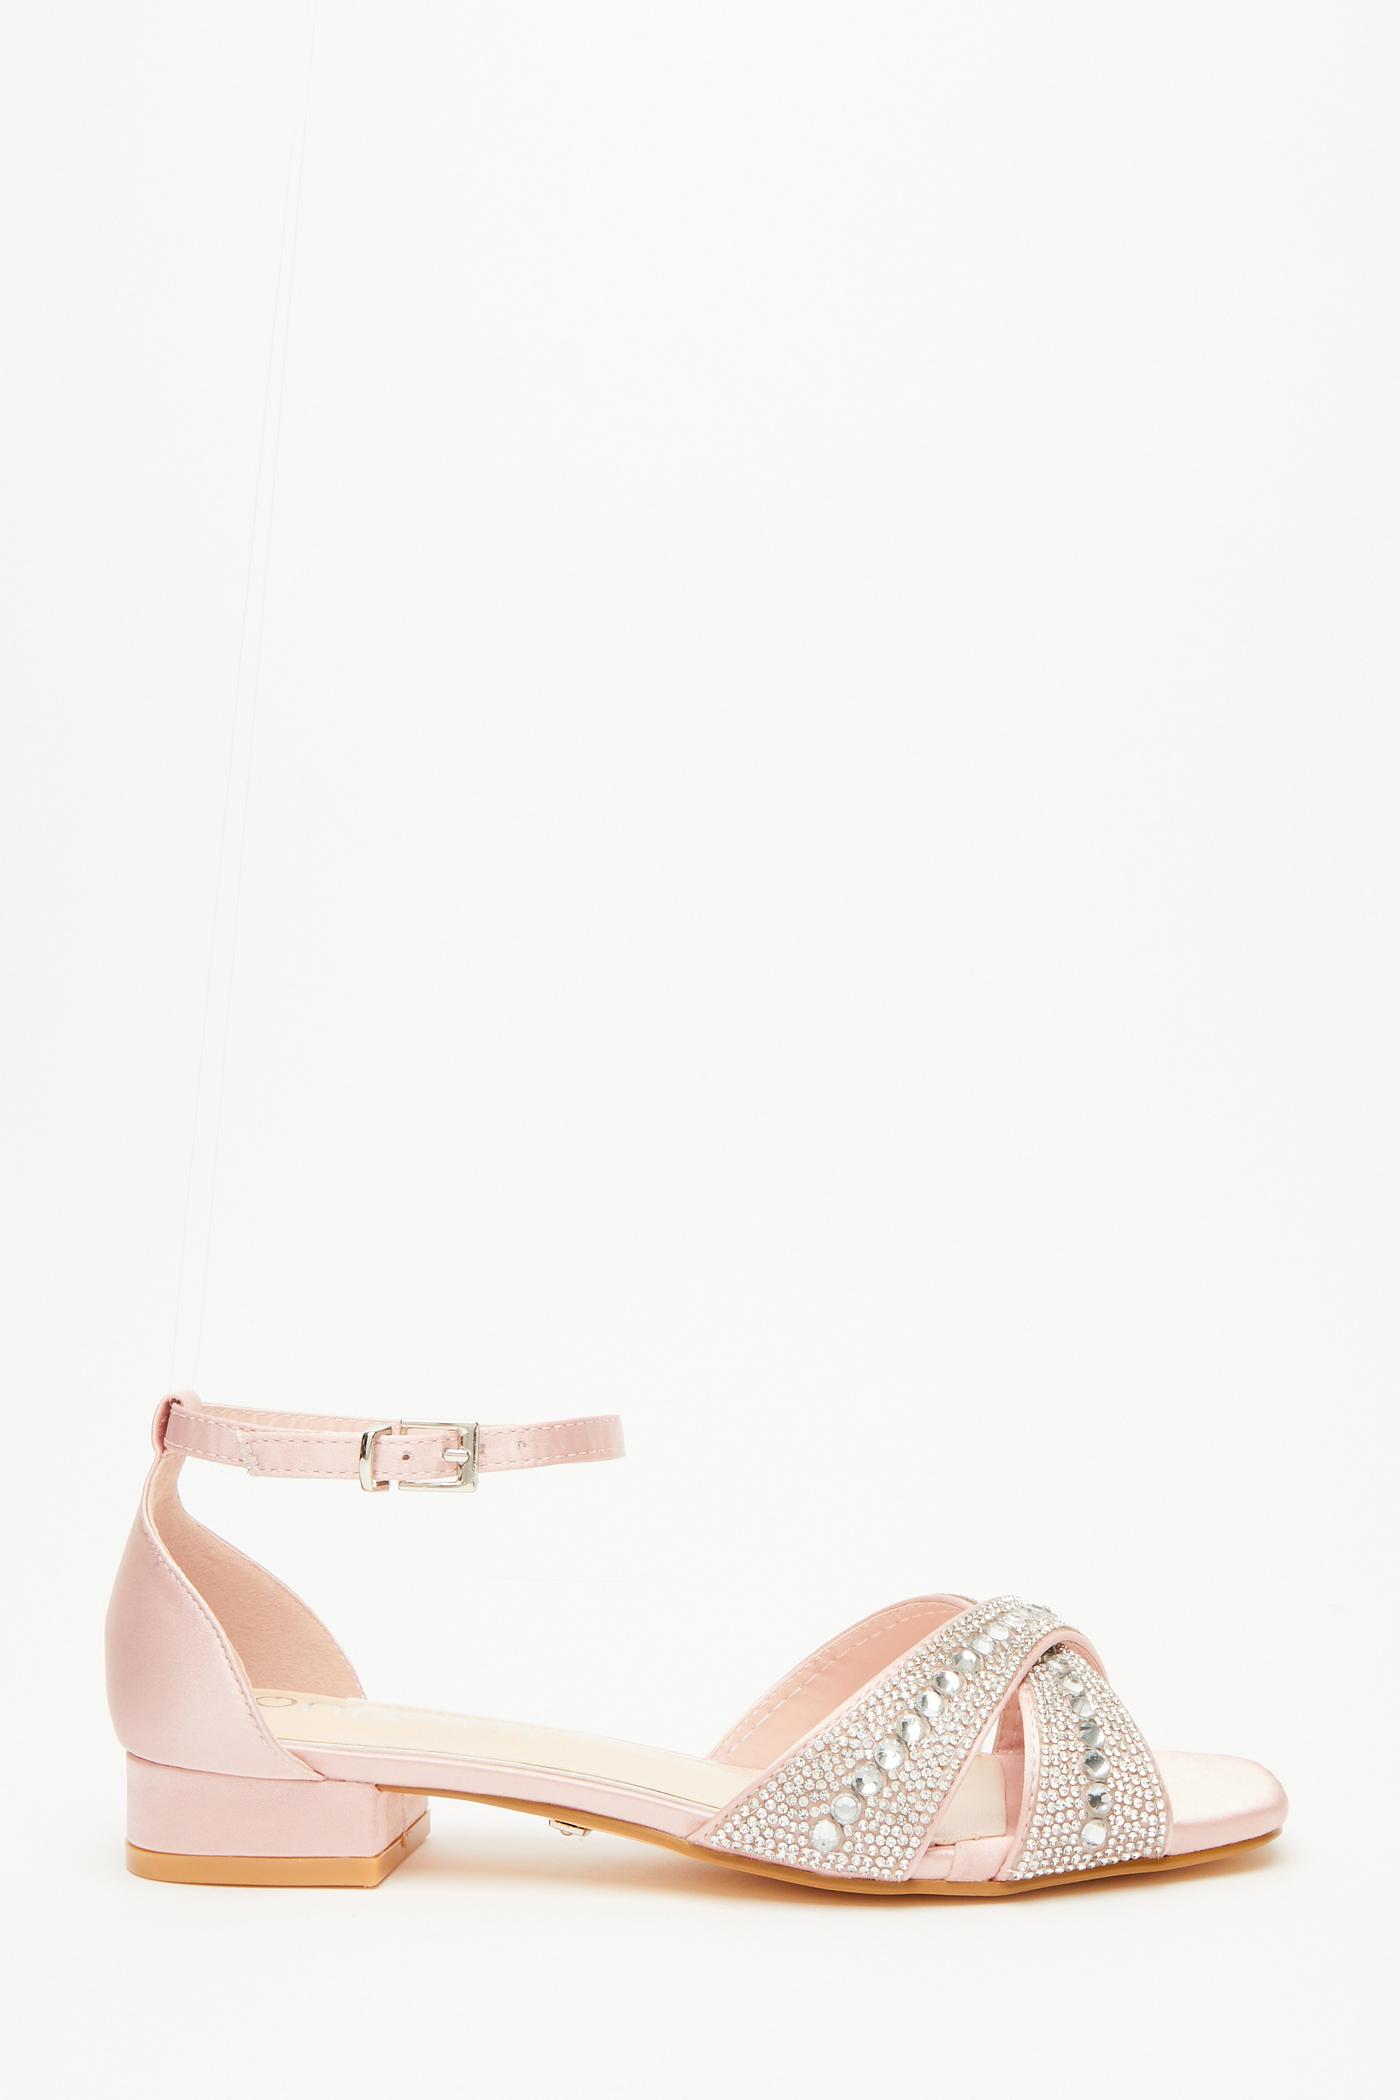 QUIZ Wide Fit Pink Diamante Cross Strap Flat Sandals